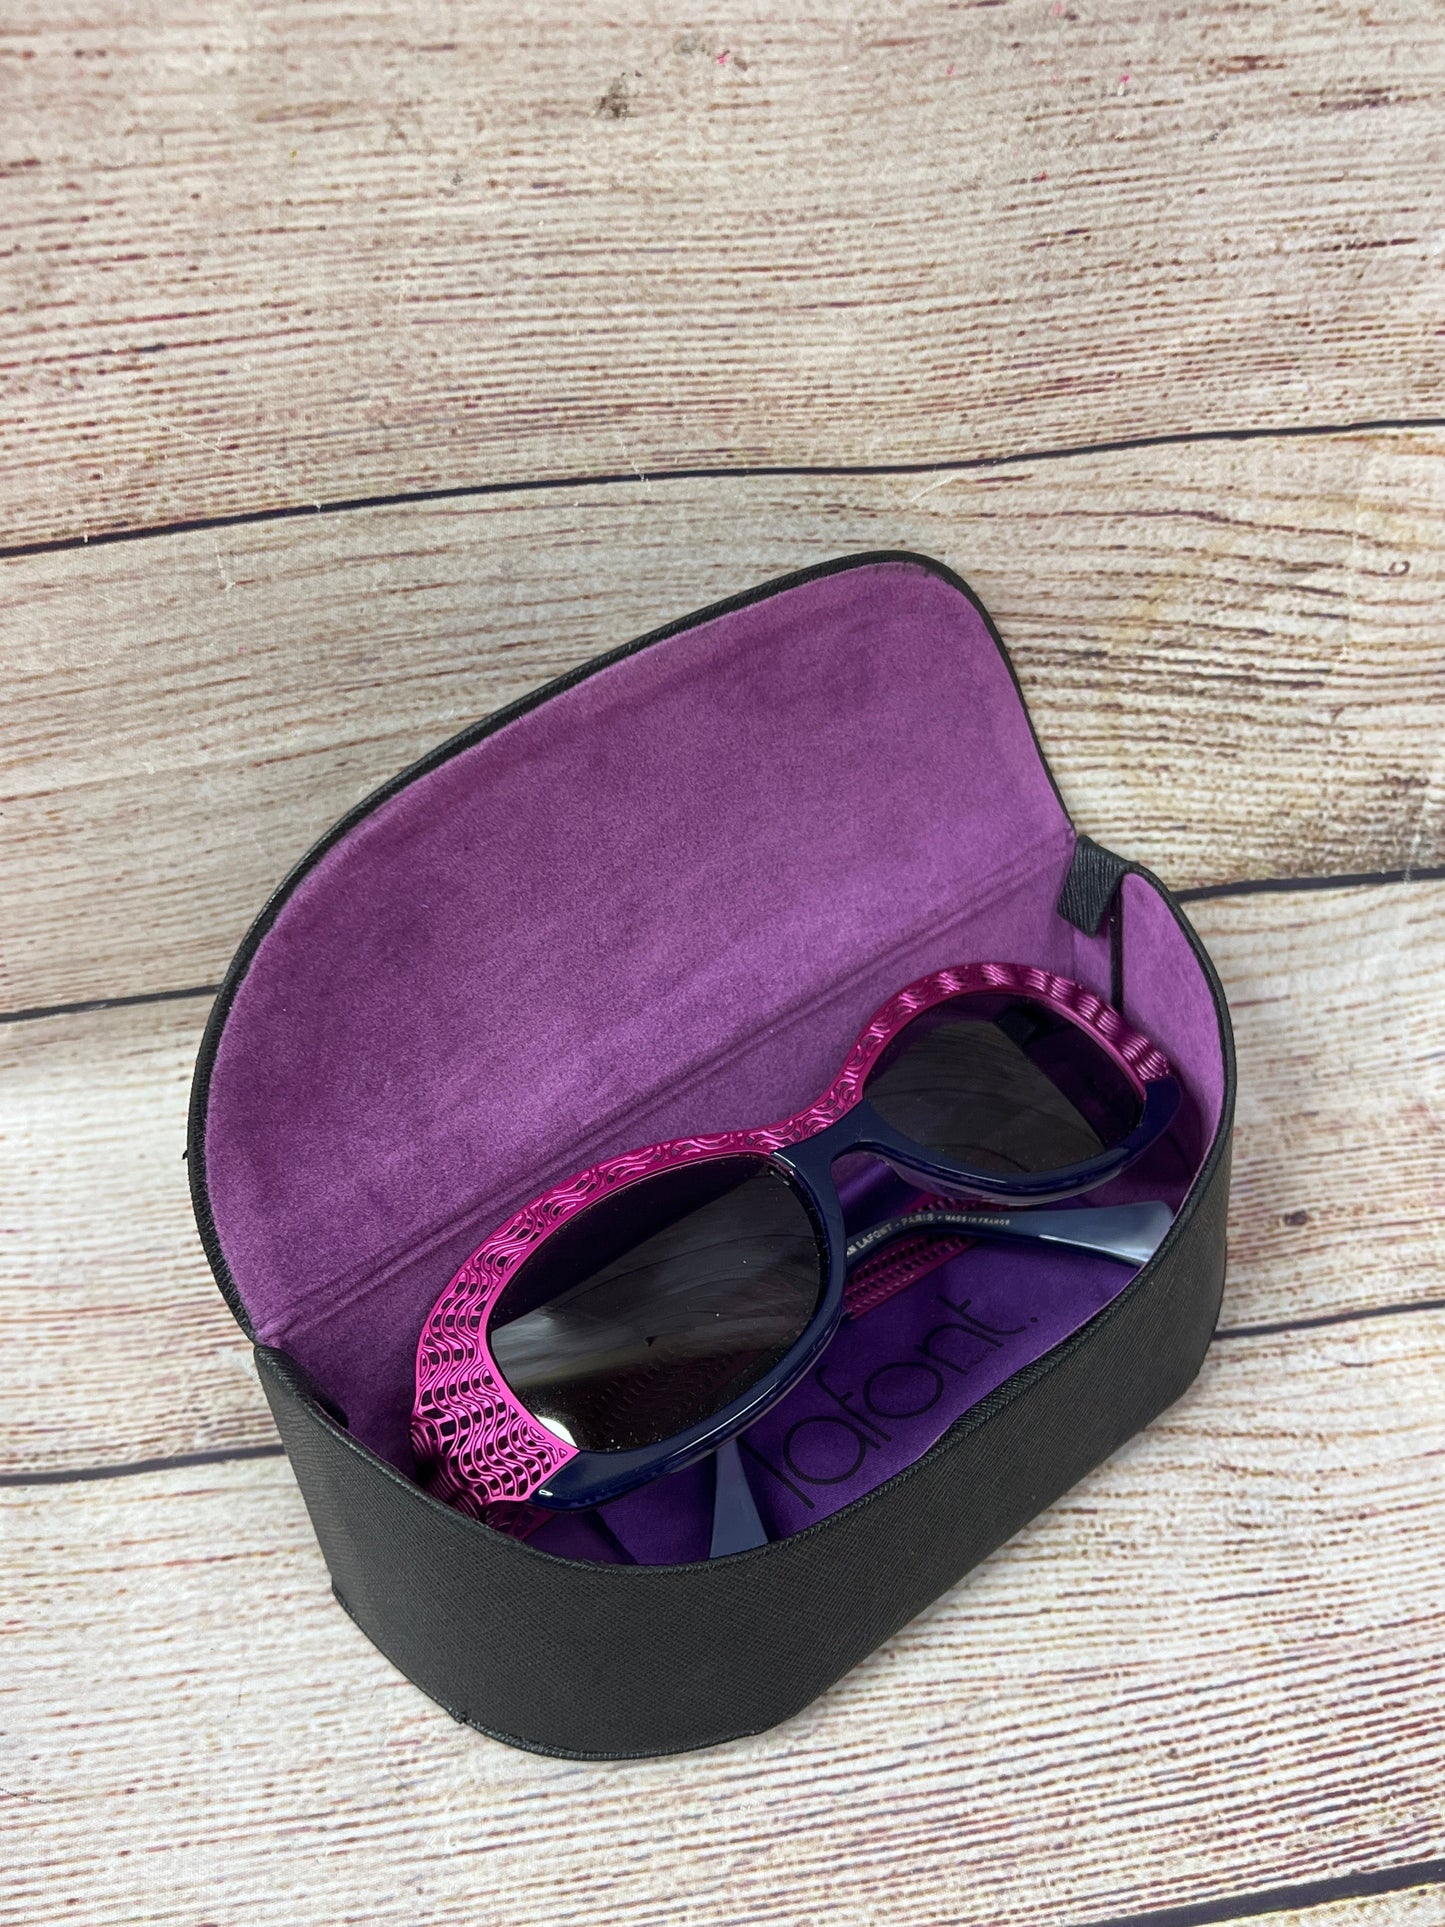 Sunglasses Luxury Designer By Cma